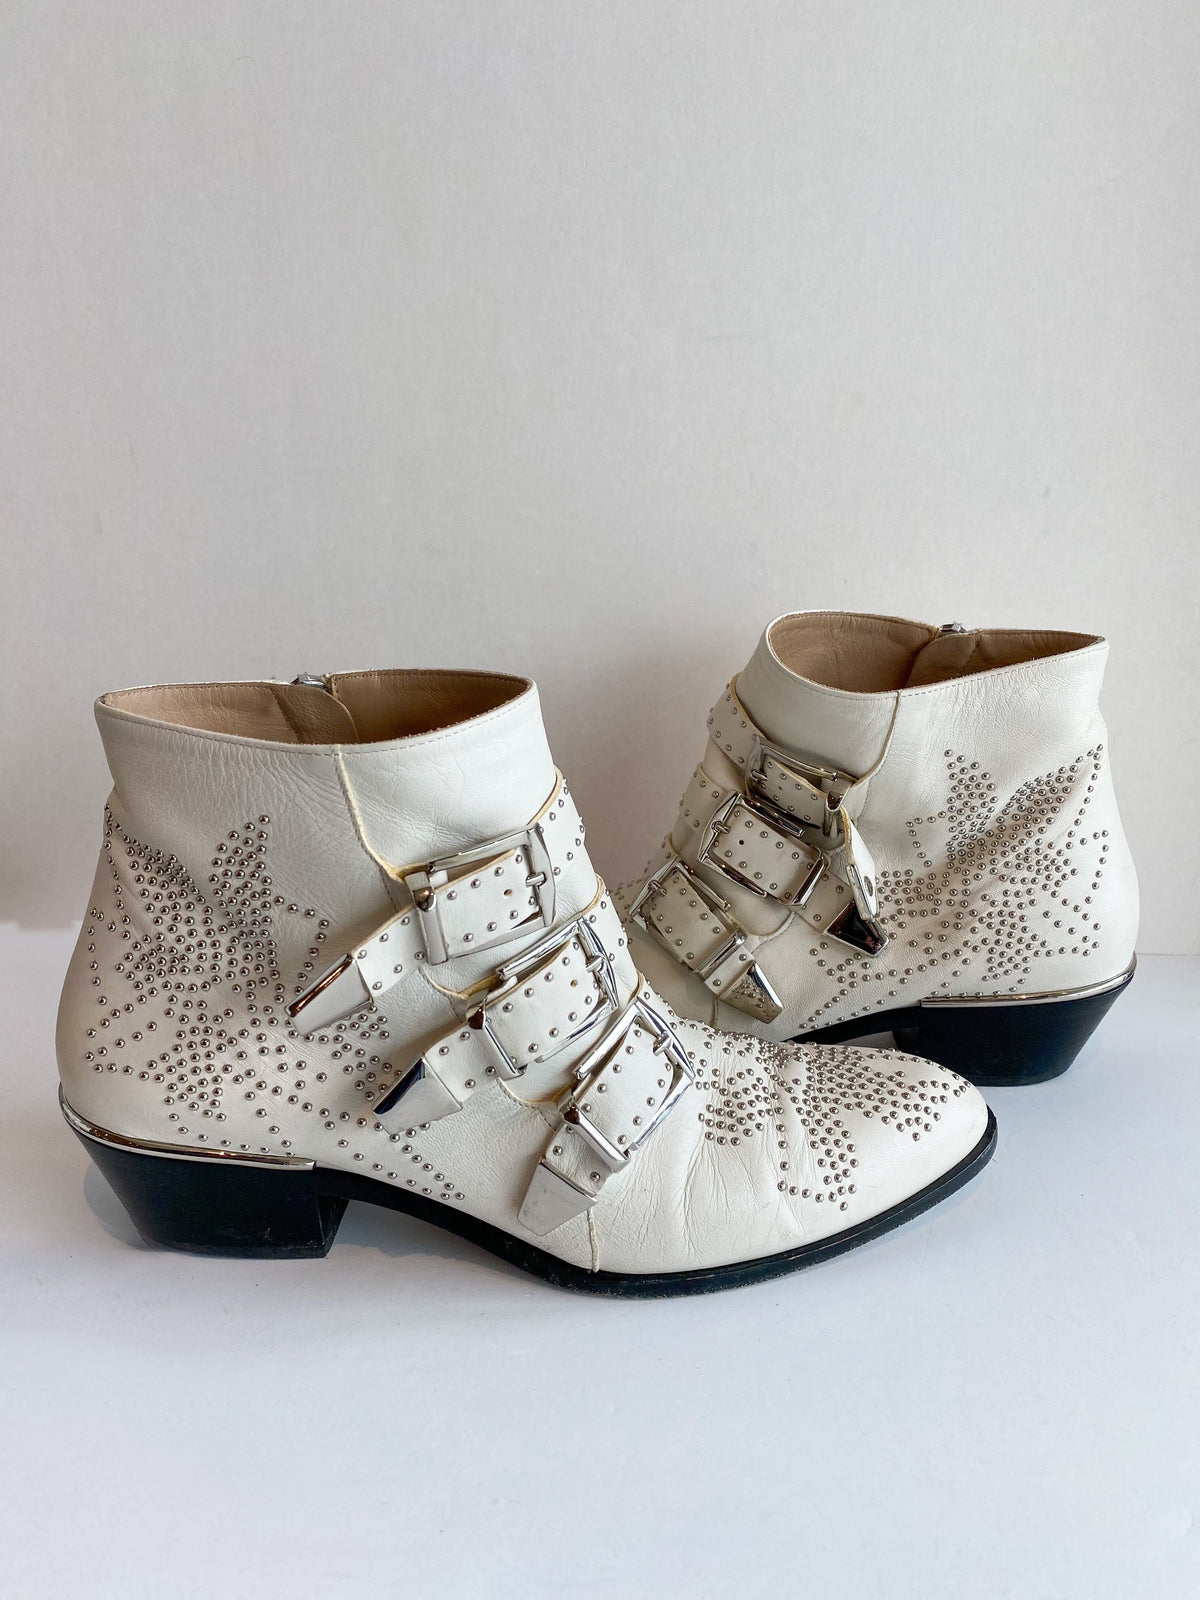 Chloe Susanna Leather Boots